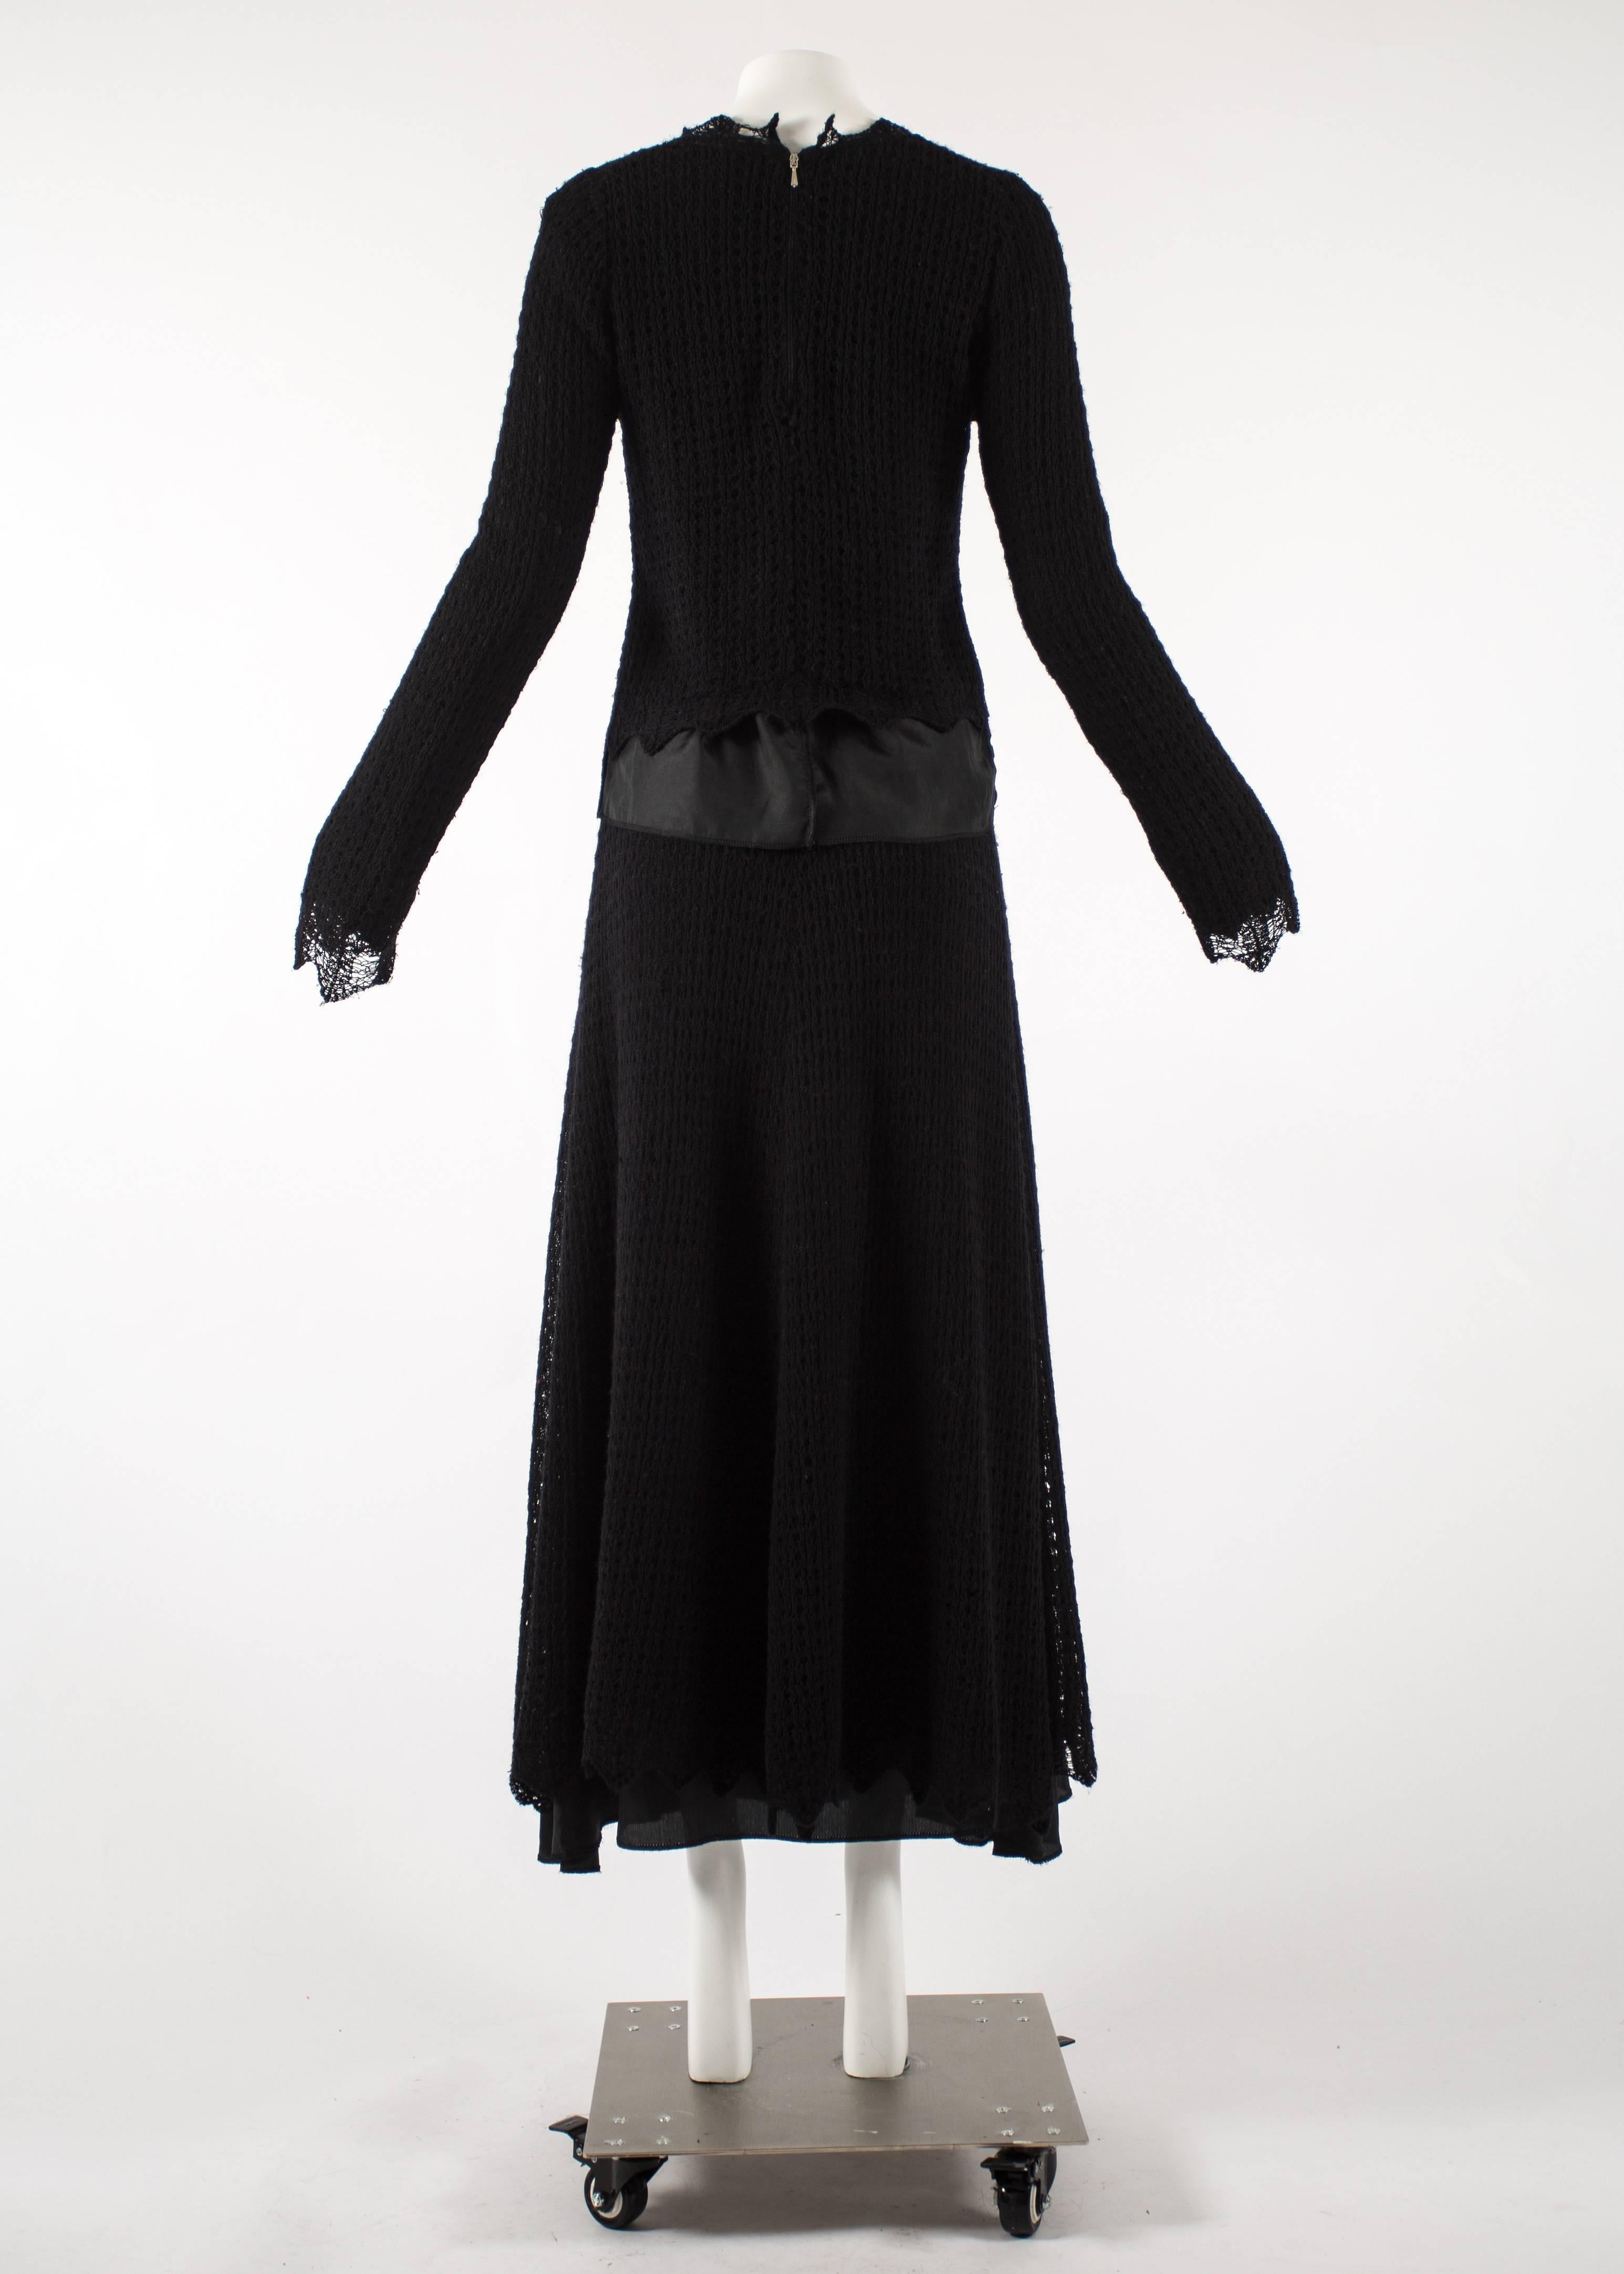 Maison Martin Margiela early 1990s black crochet wool and satin skirt suit 2